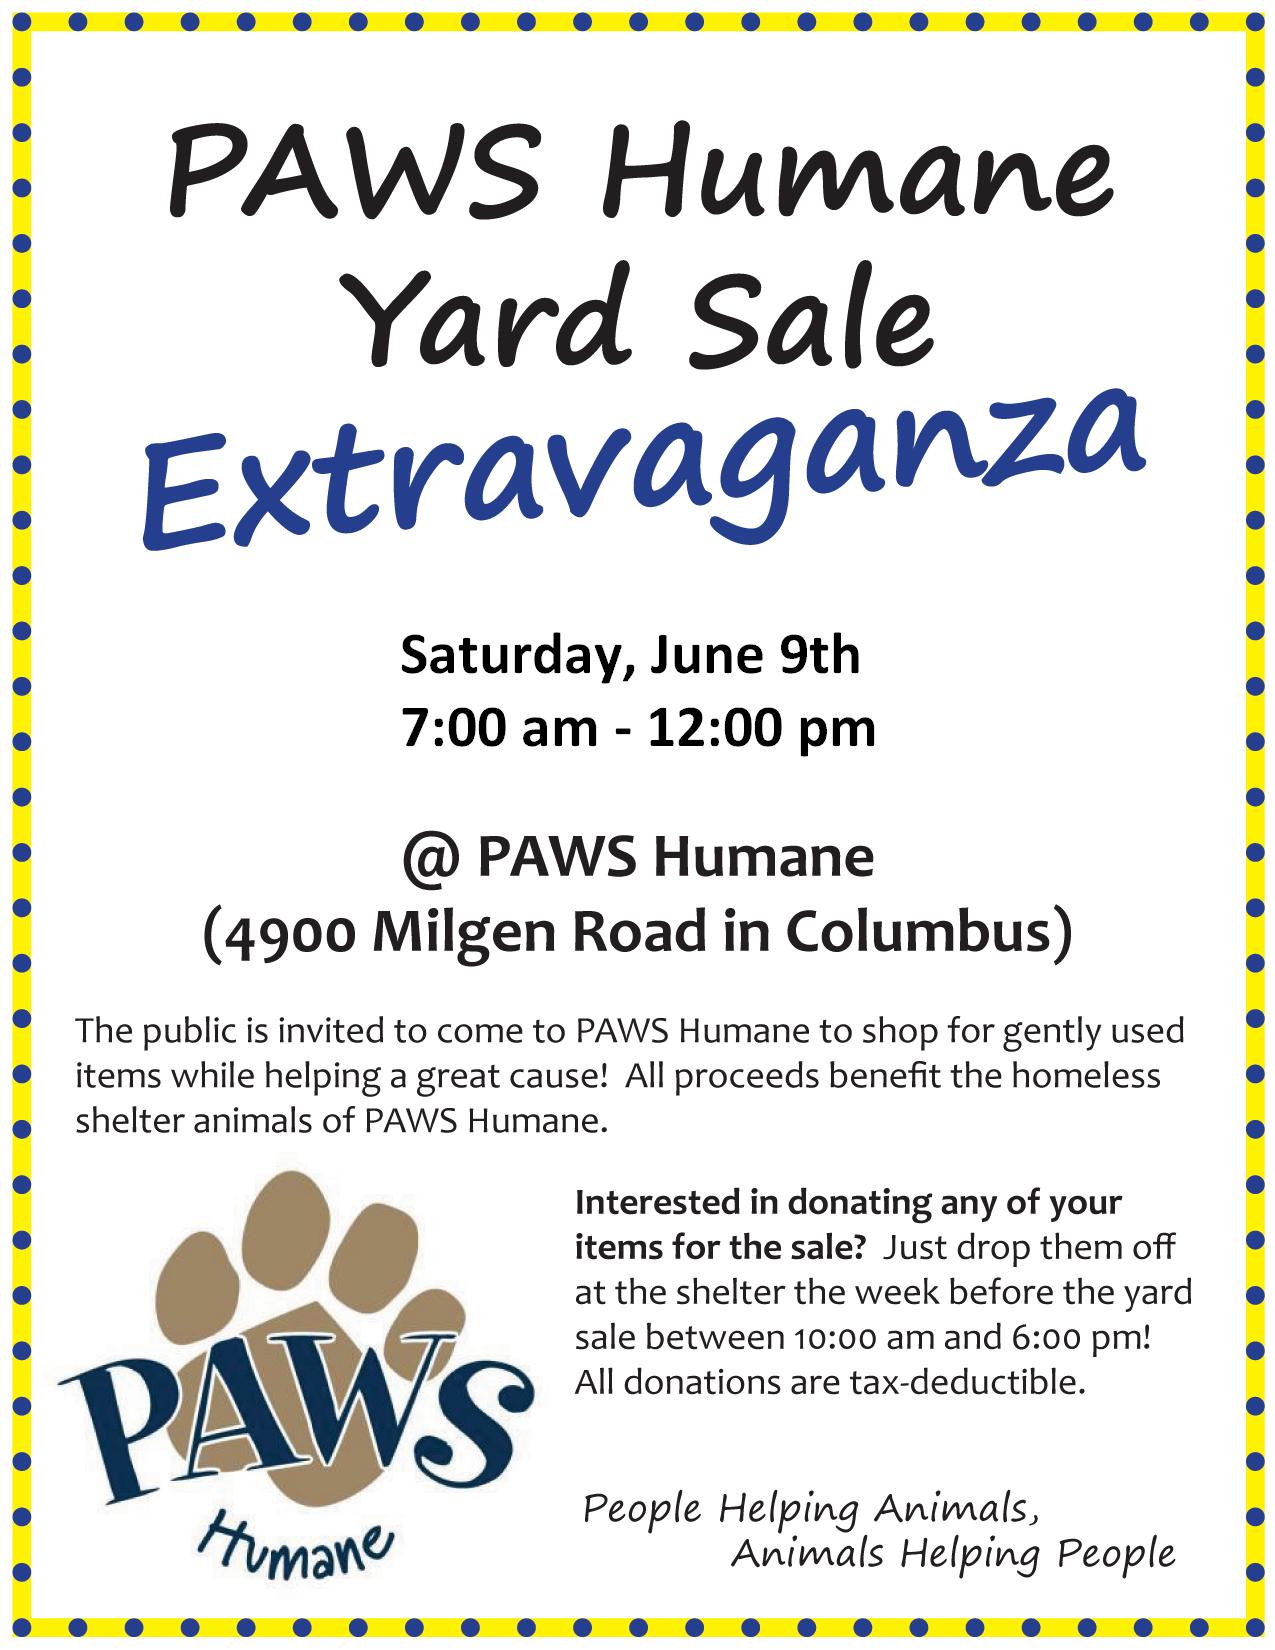 Yard Sale Extravaganza at PAWS Humane